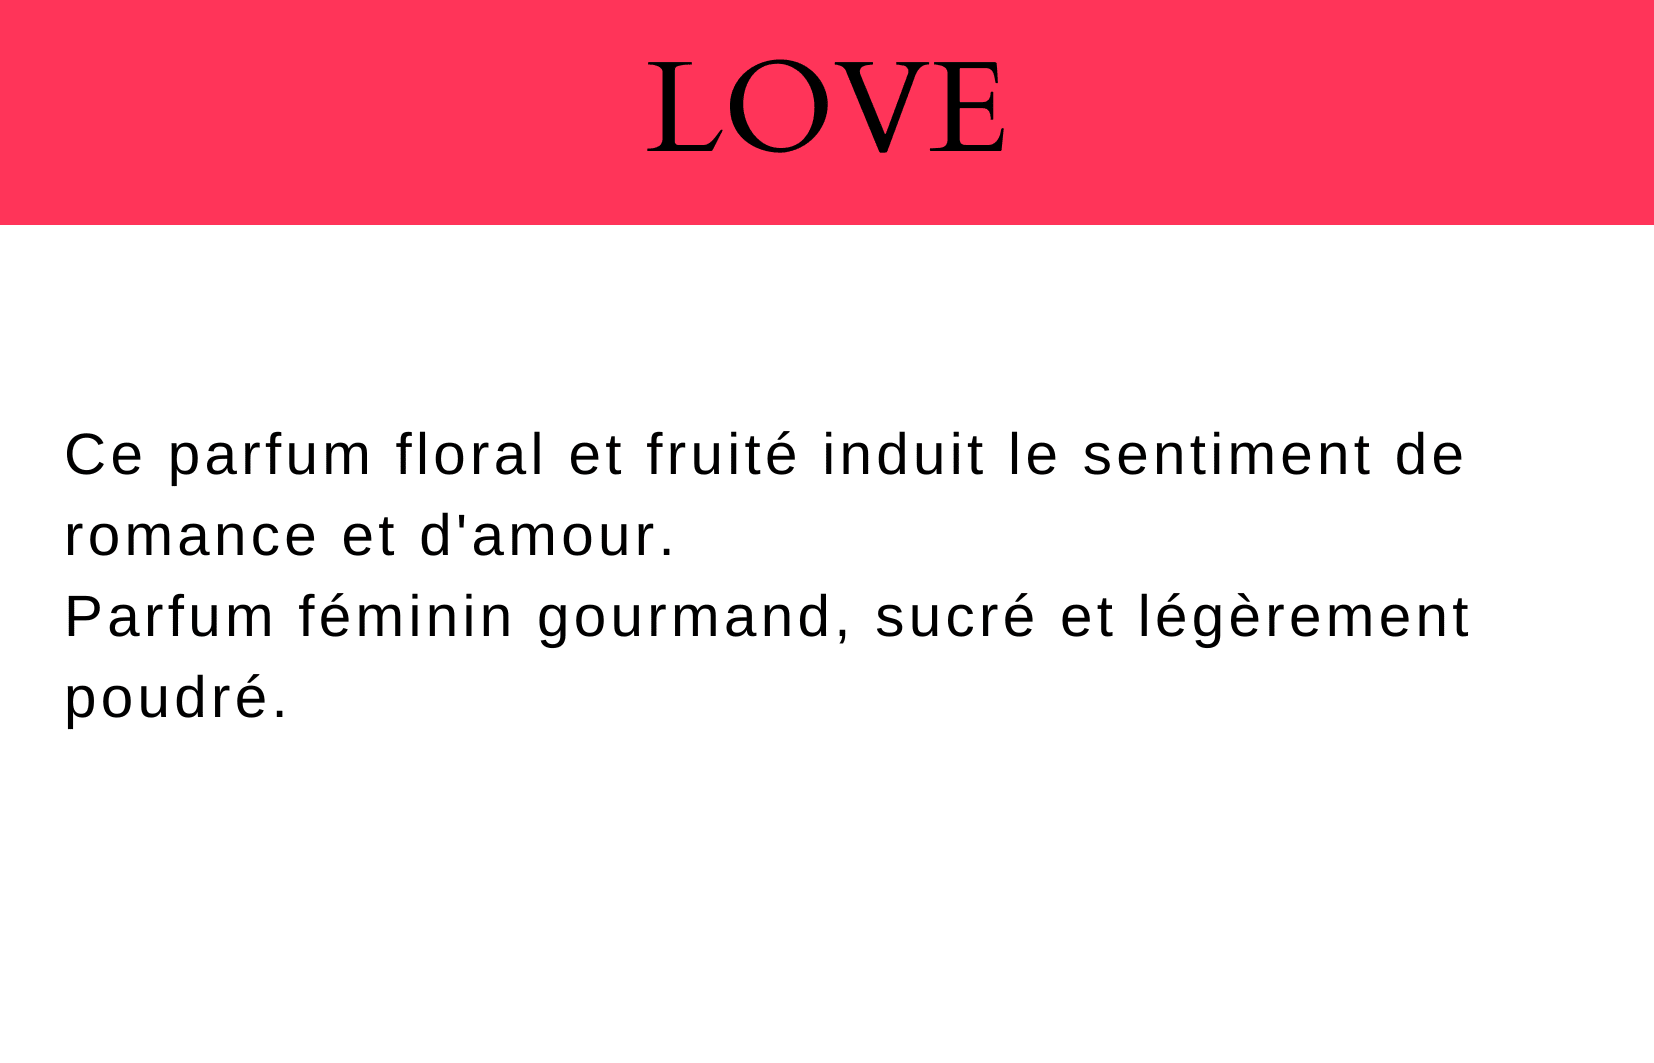 Love parfum